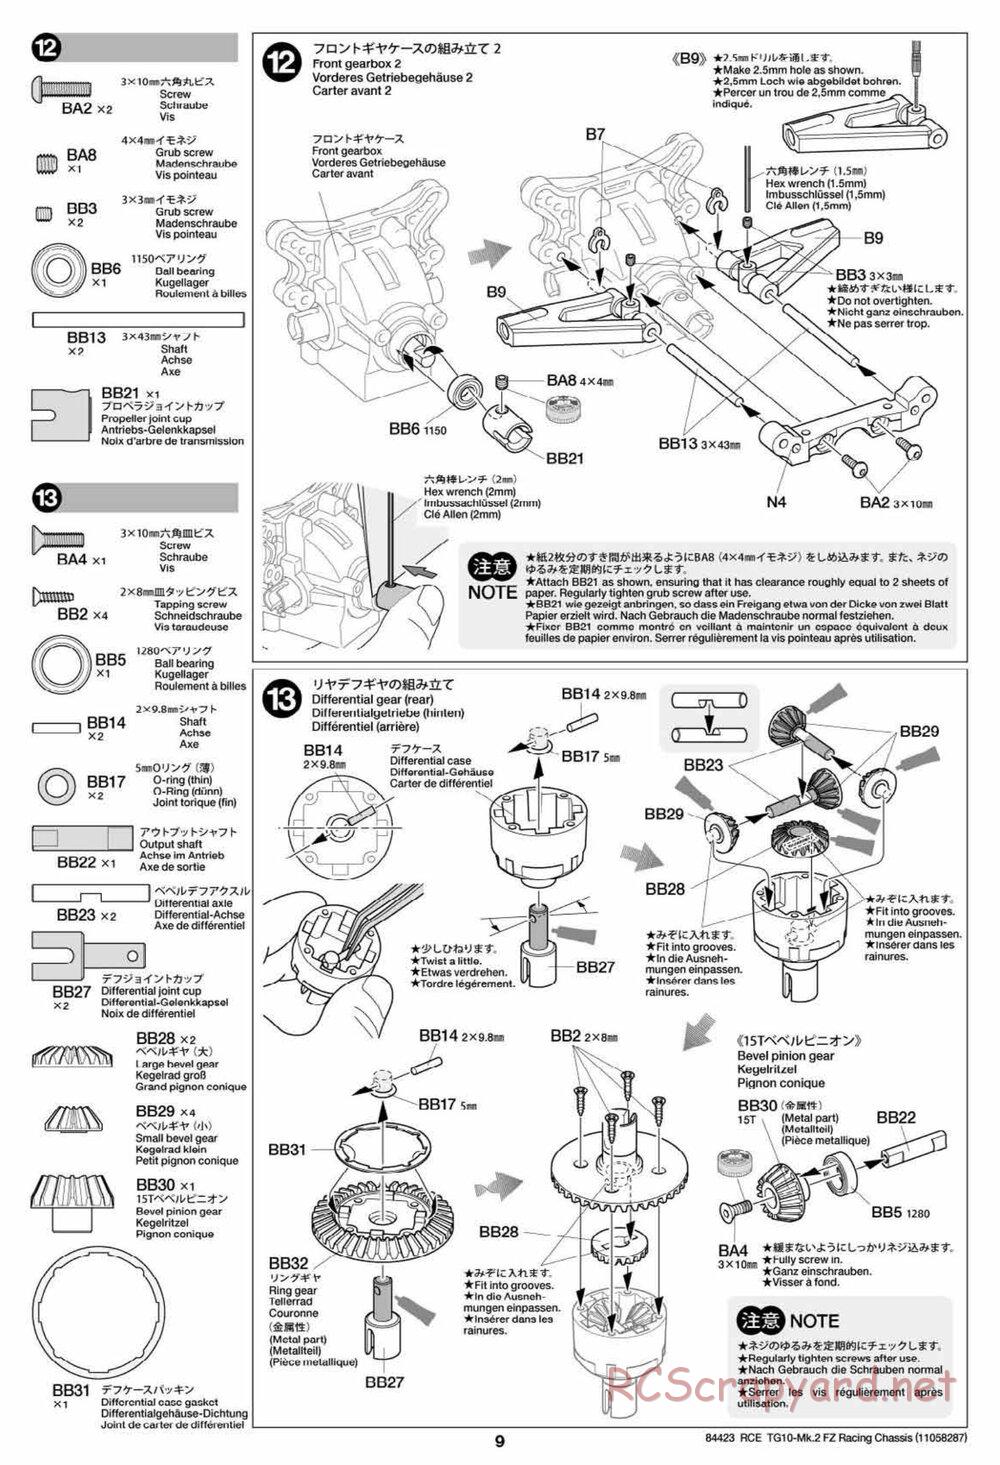 Tamiya - TG10 Mk.2 FZ Racing Chassis - Manual - Page 9